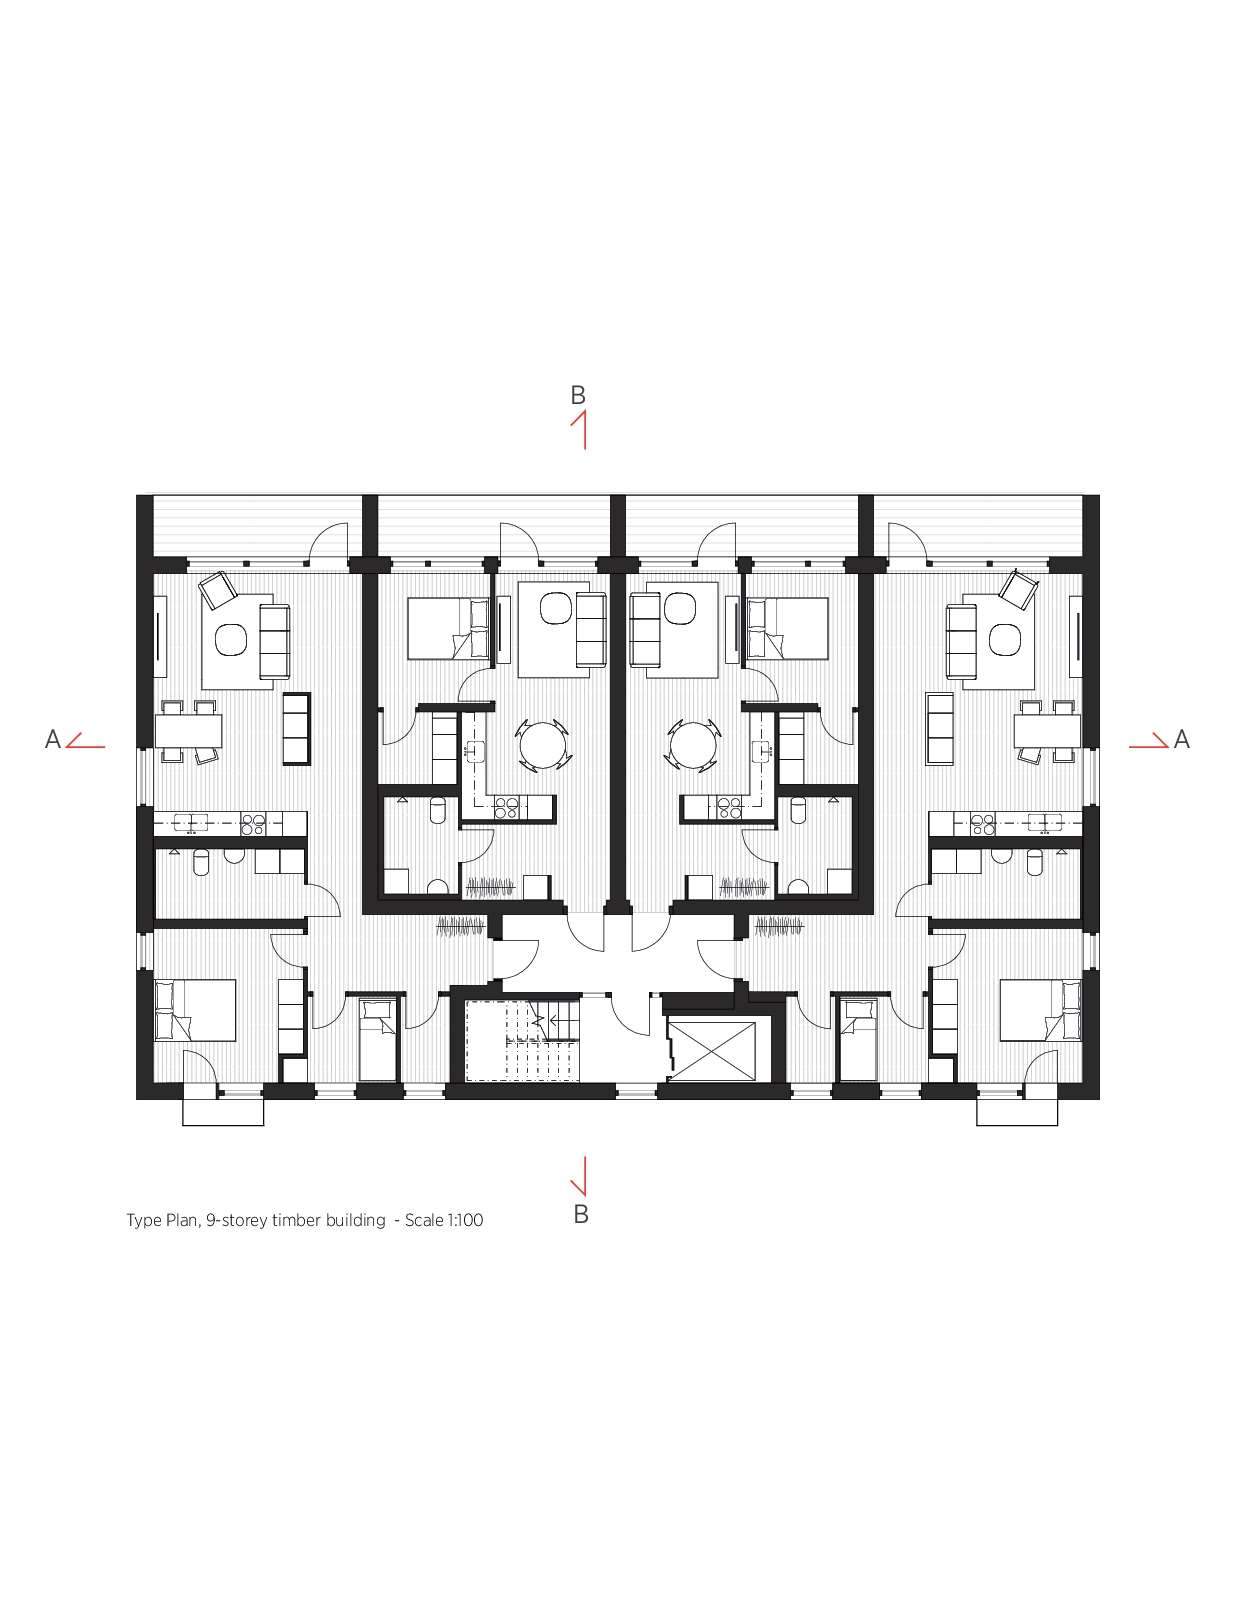 Typical floor plan 9 storey timber building 1 100